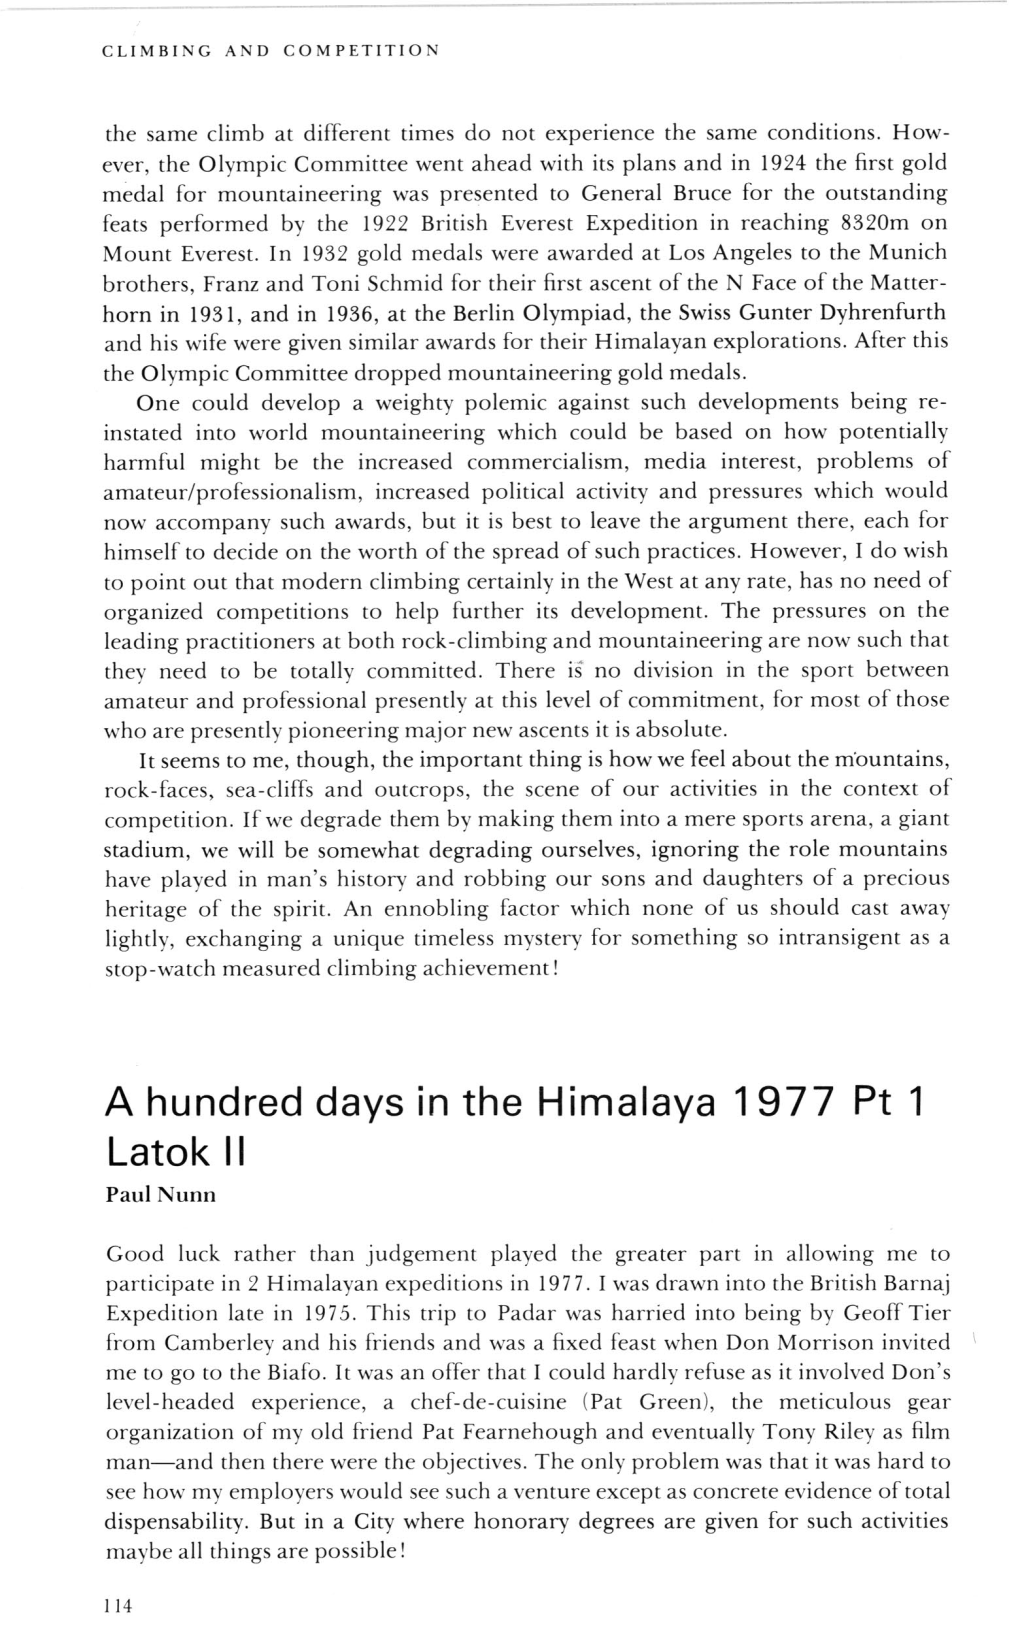 A Hundred Days in the Himalaya 1977 Pt I Latok II Paul